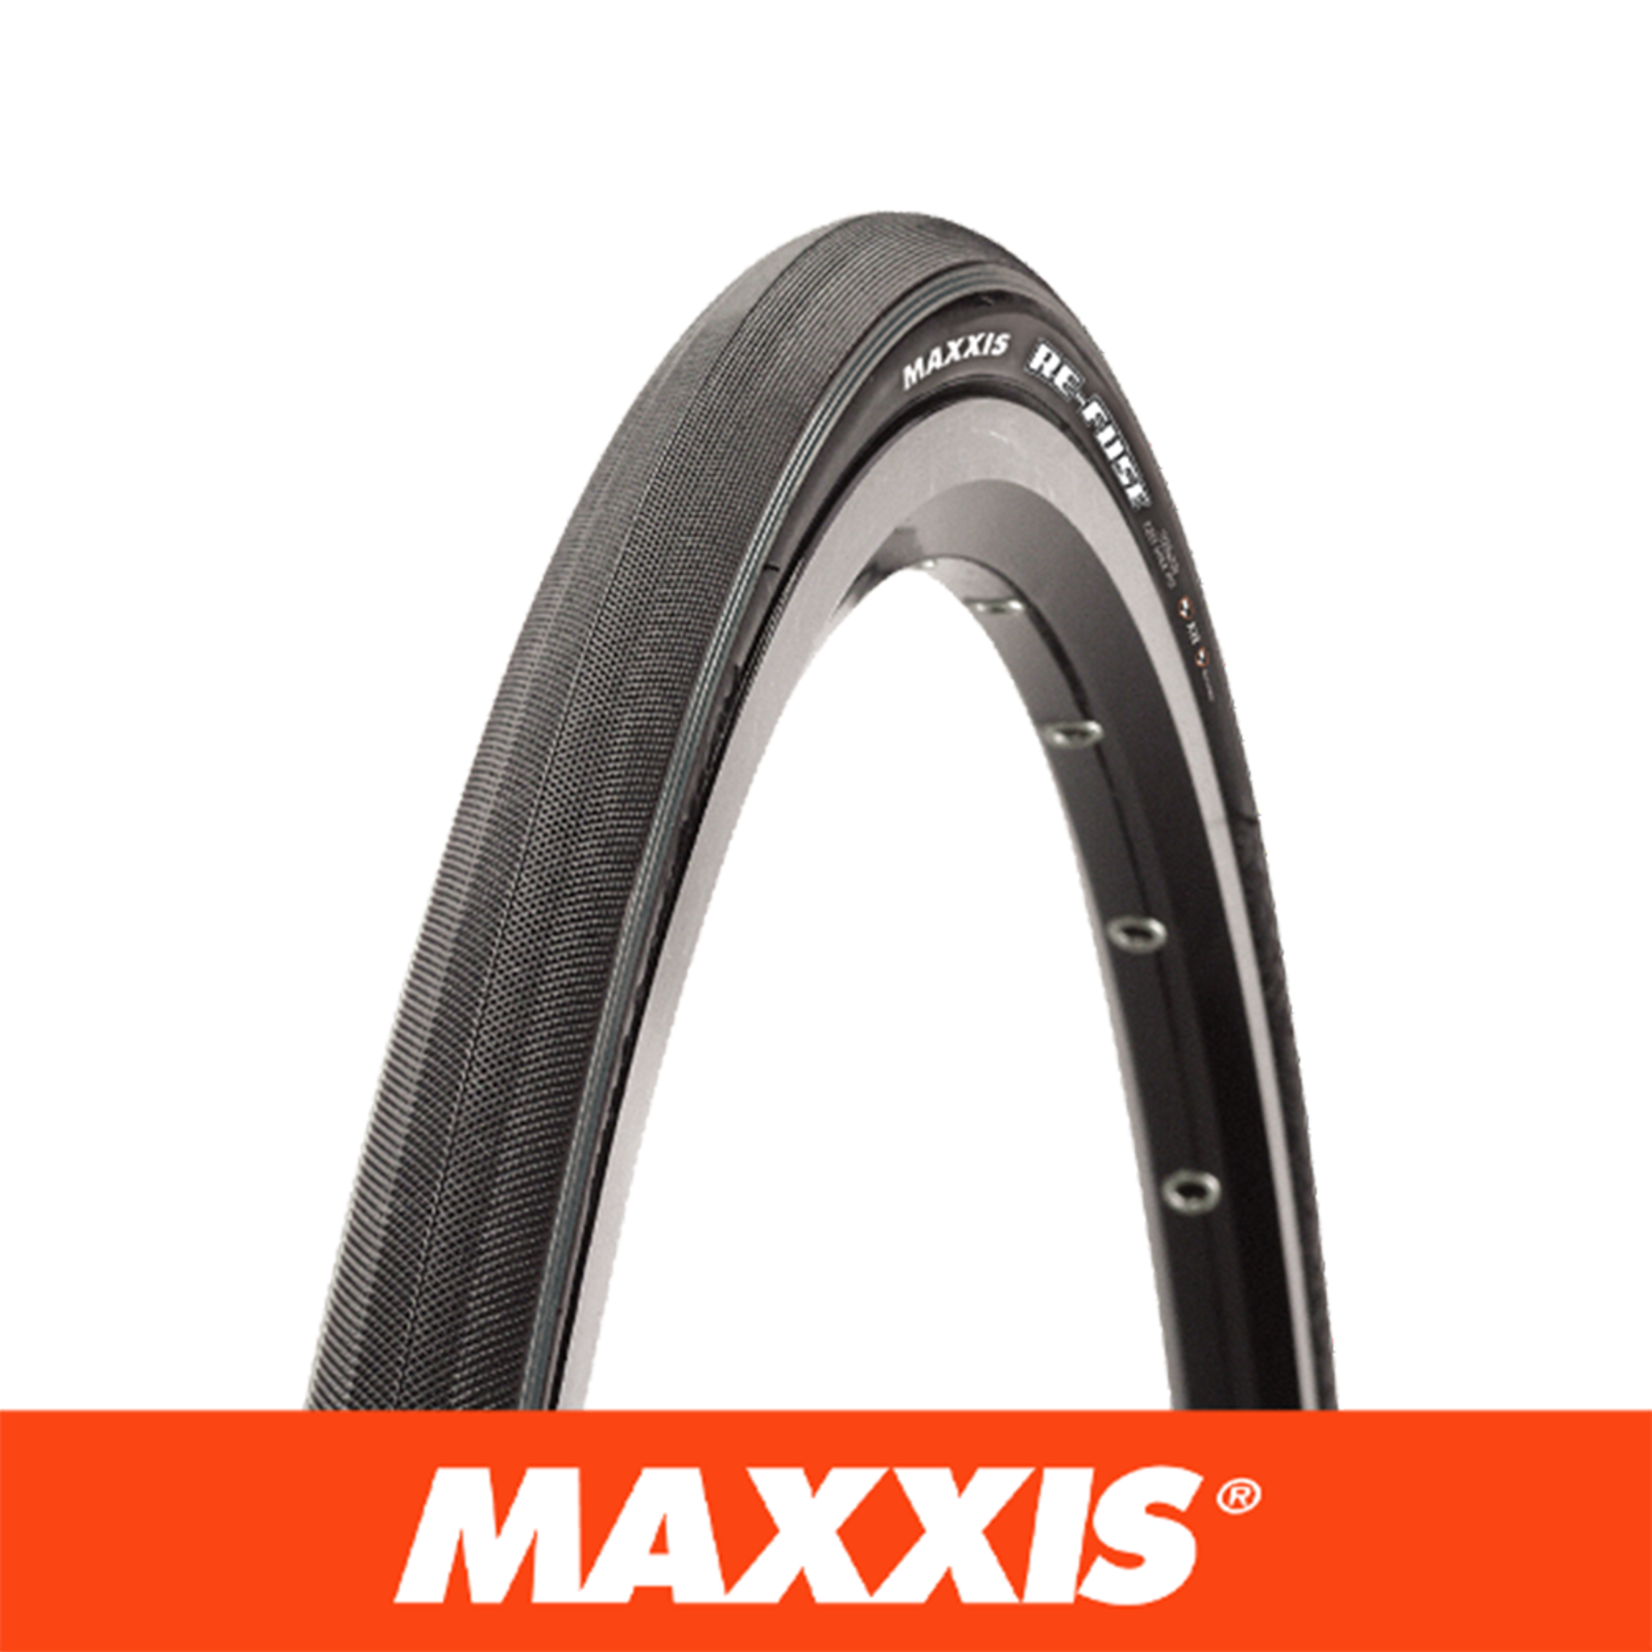 MAXXIS REFUSE 700 x 23c BLACK FOLDING